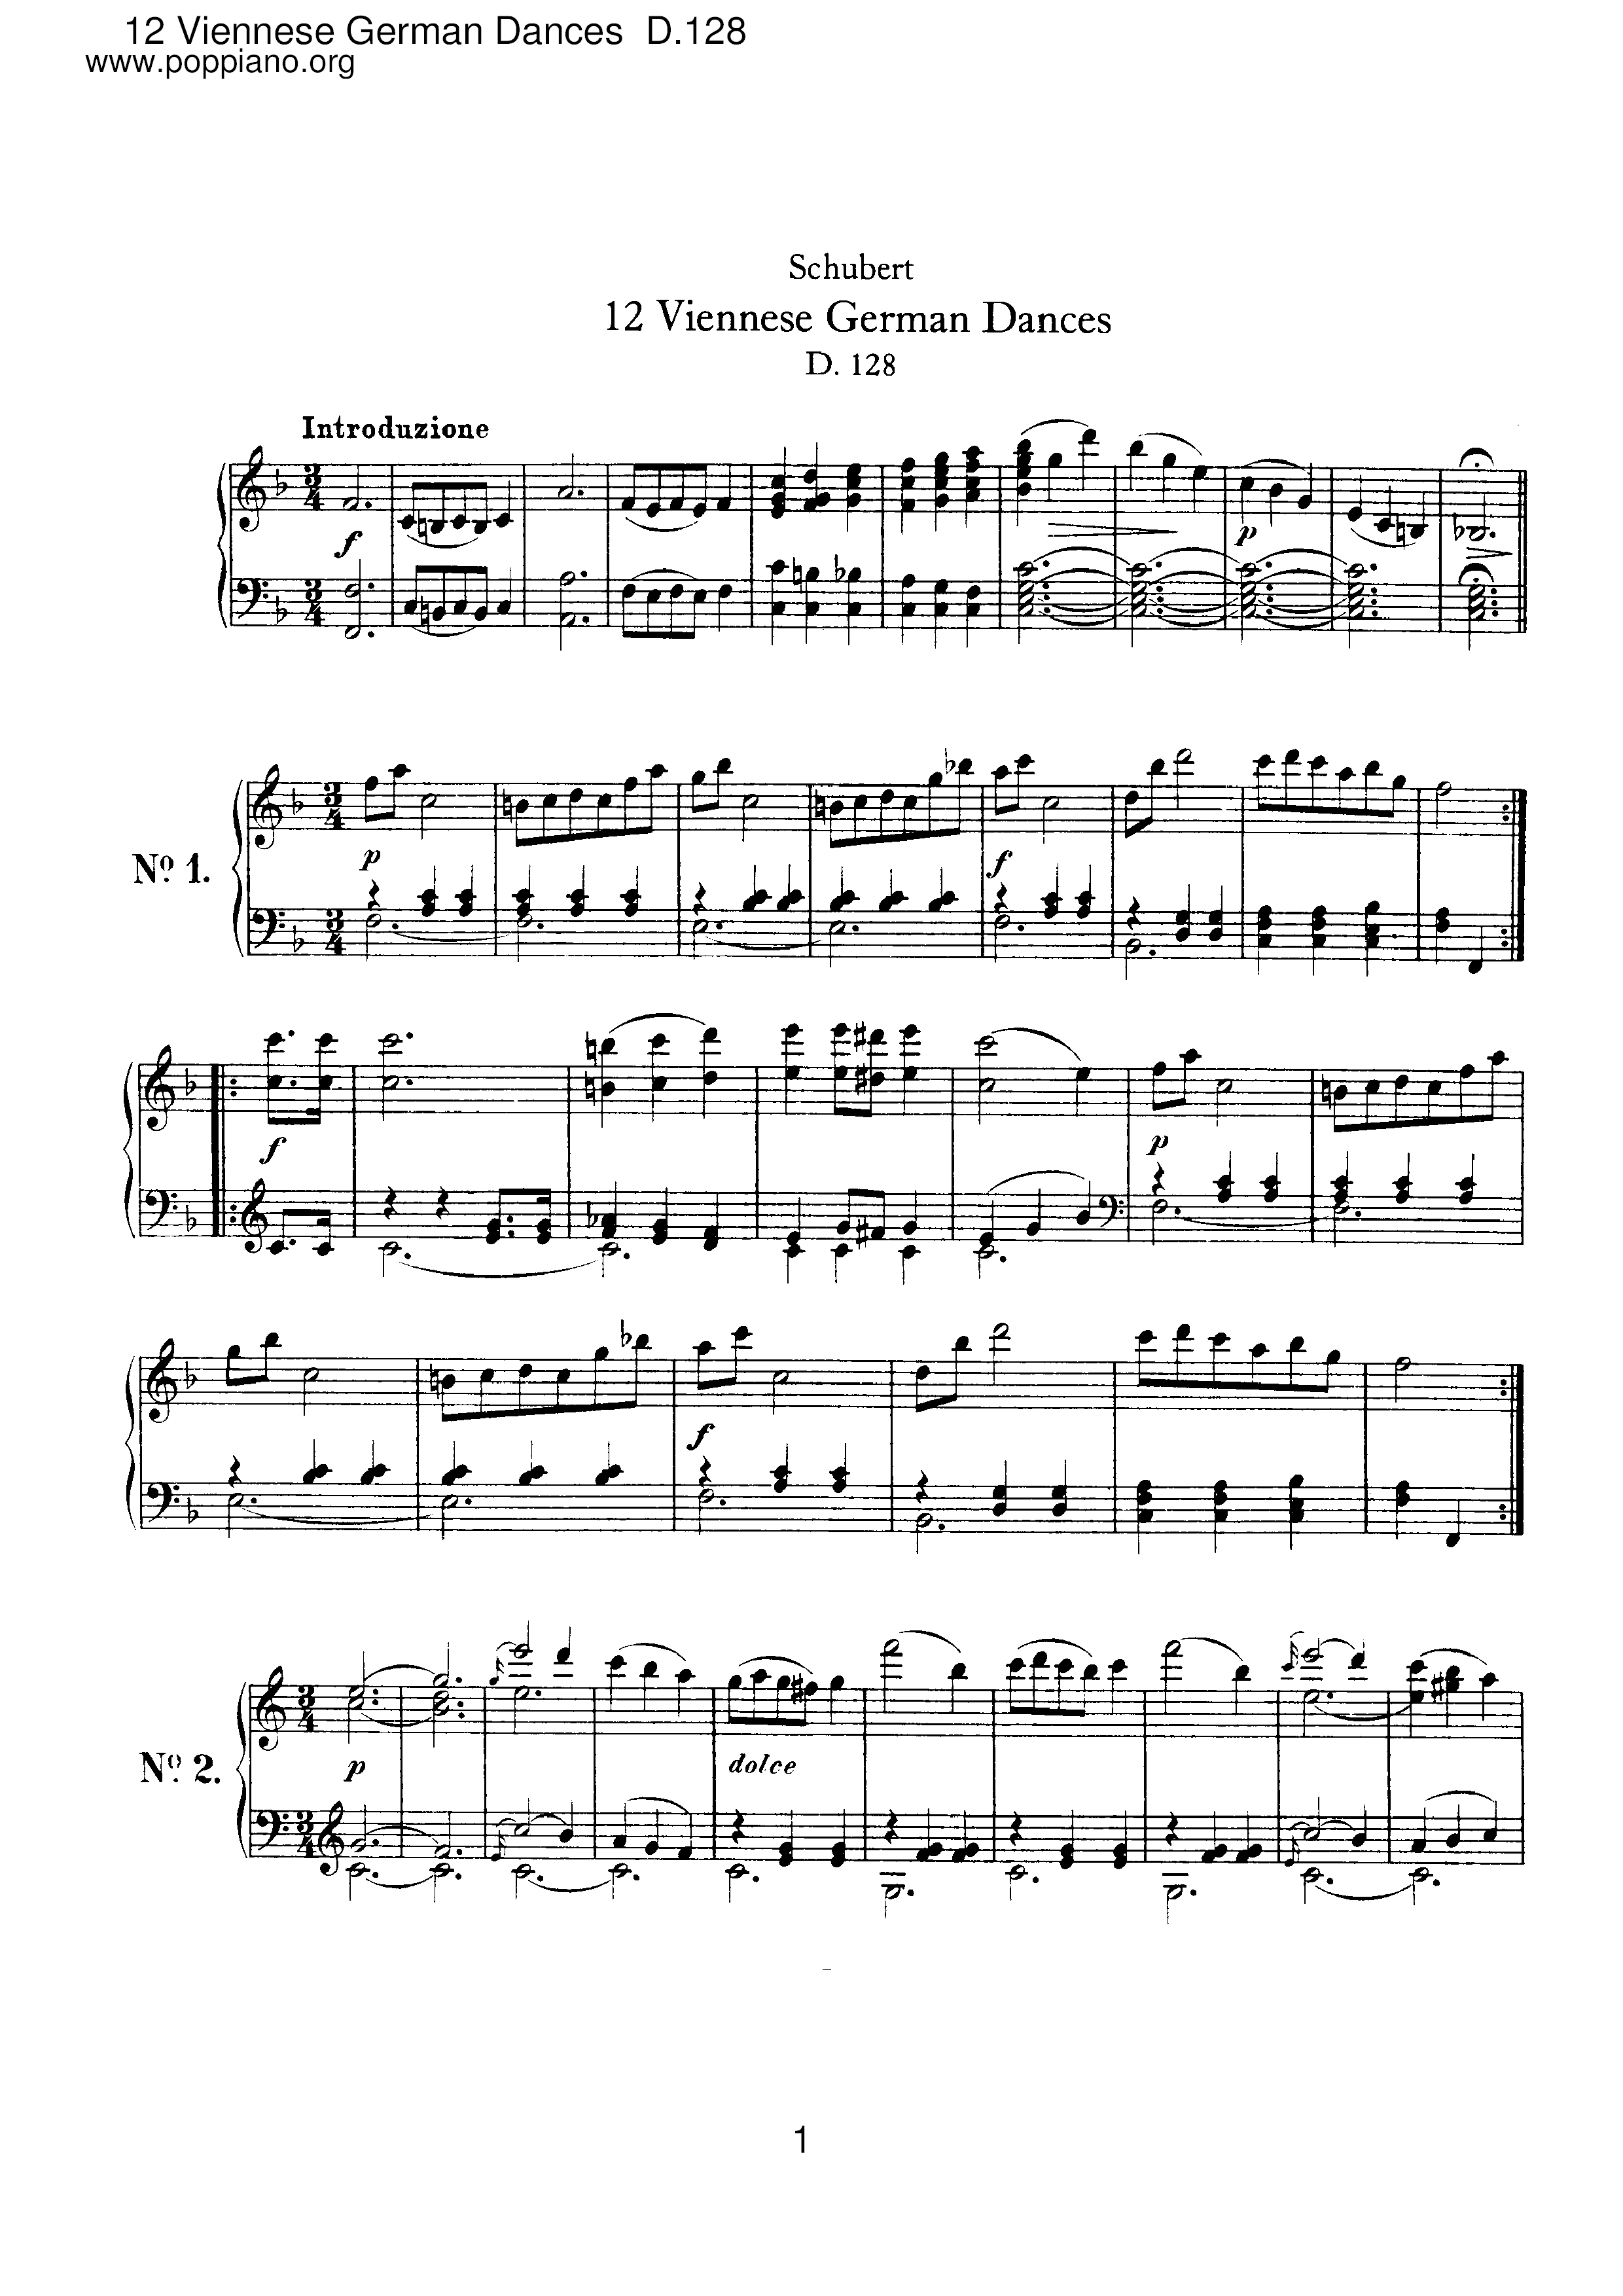 12 Viennese German Dances, D.128ピアノ譜